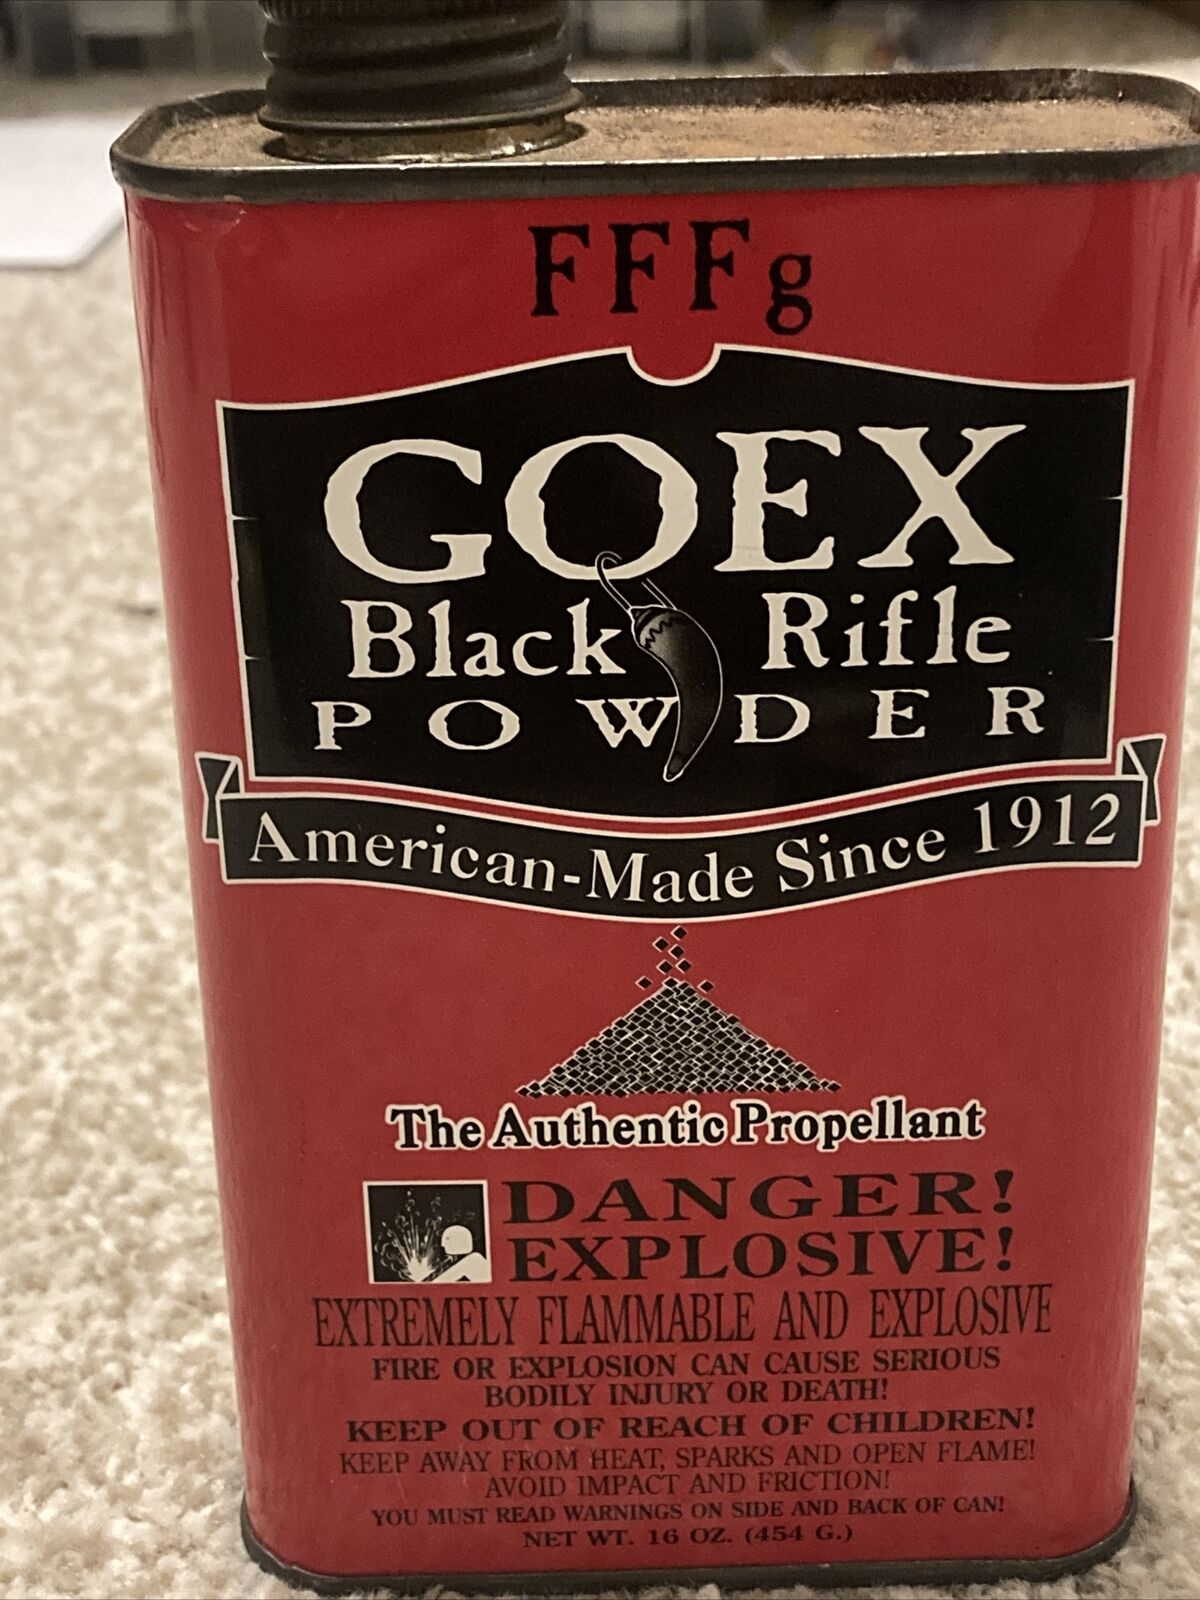 Goex black rifle powder empty tin FFFg